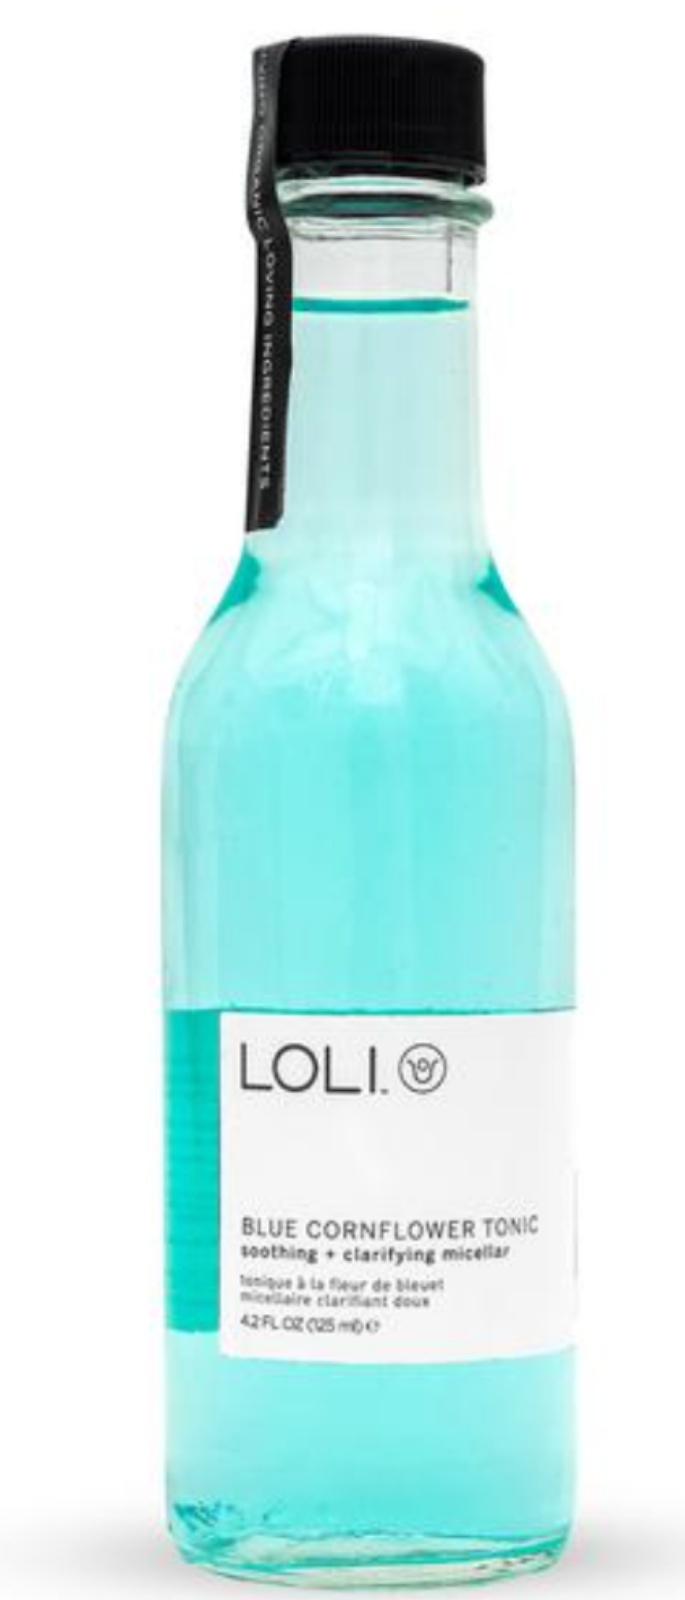 LOLI Blue Cornflower Tonic